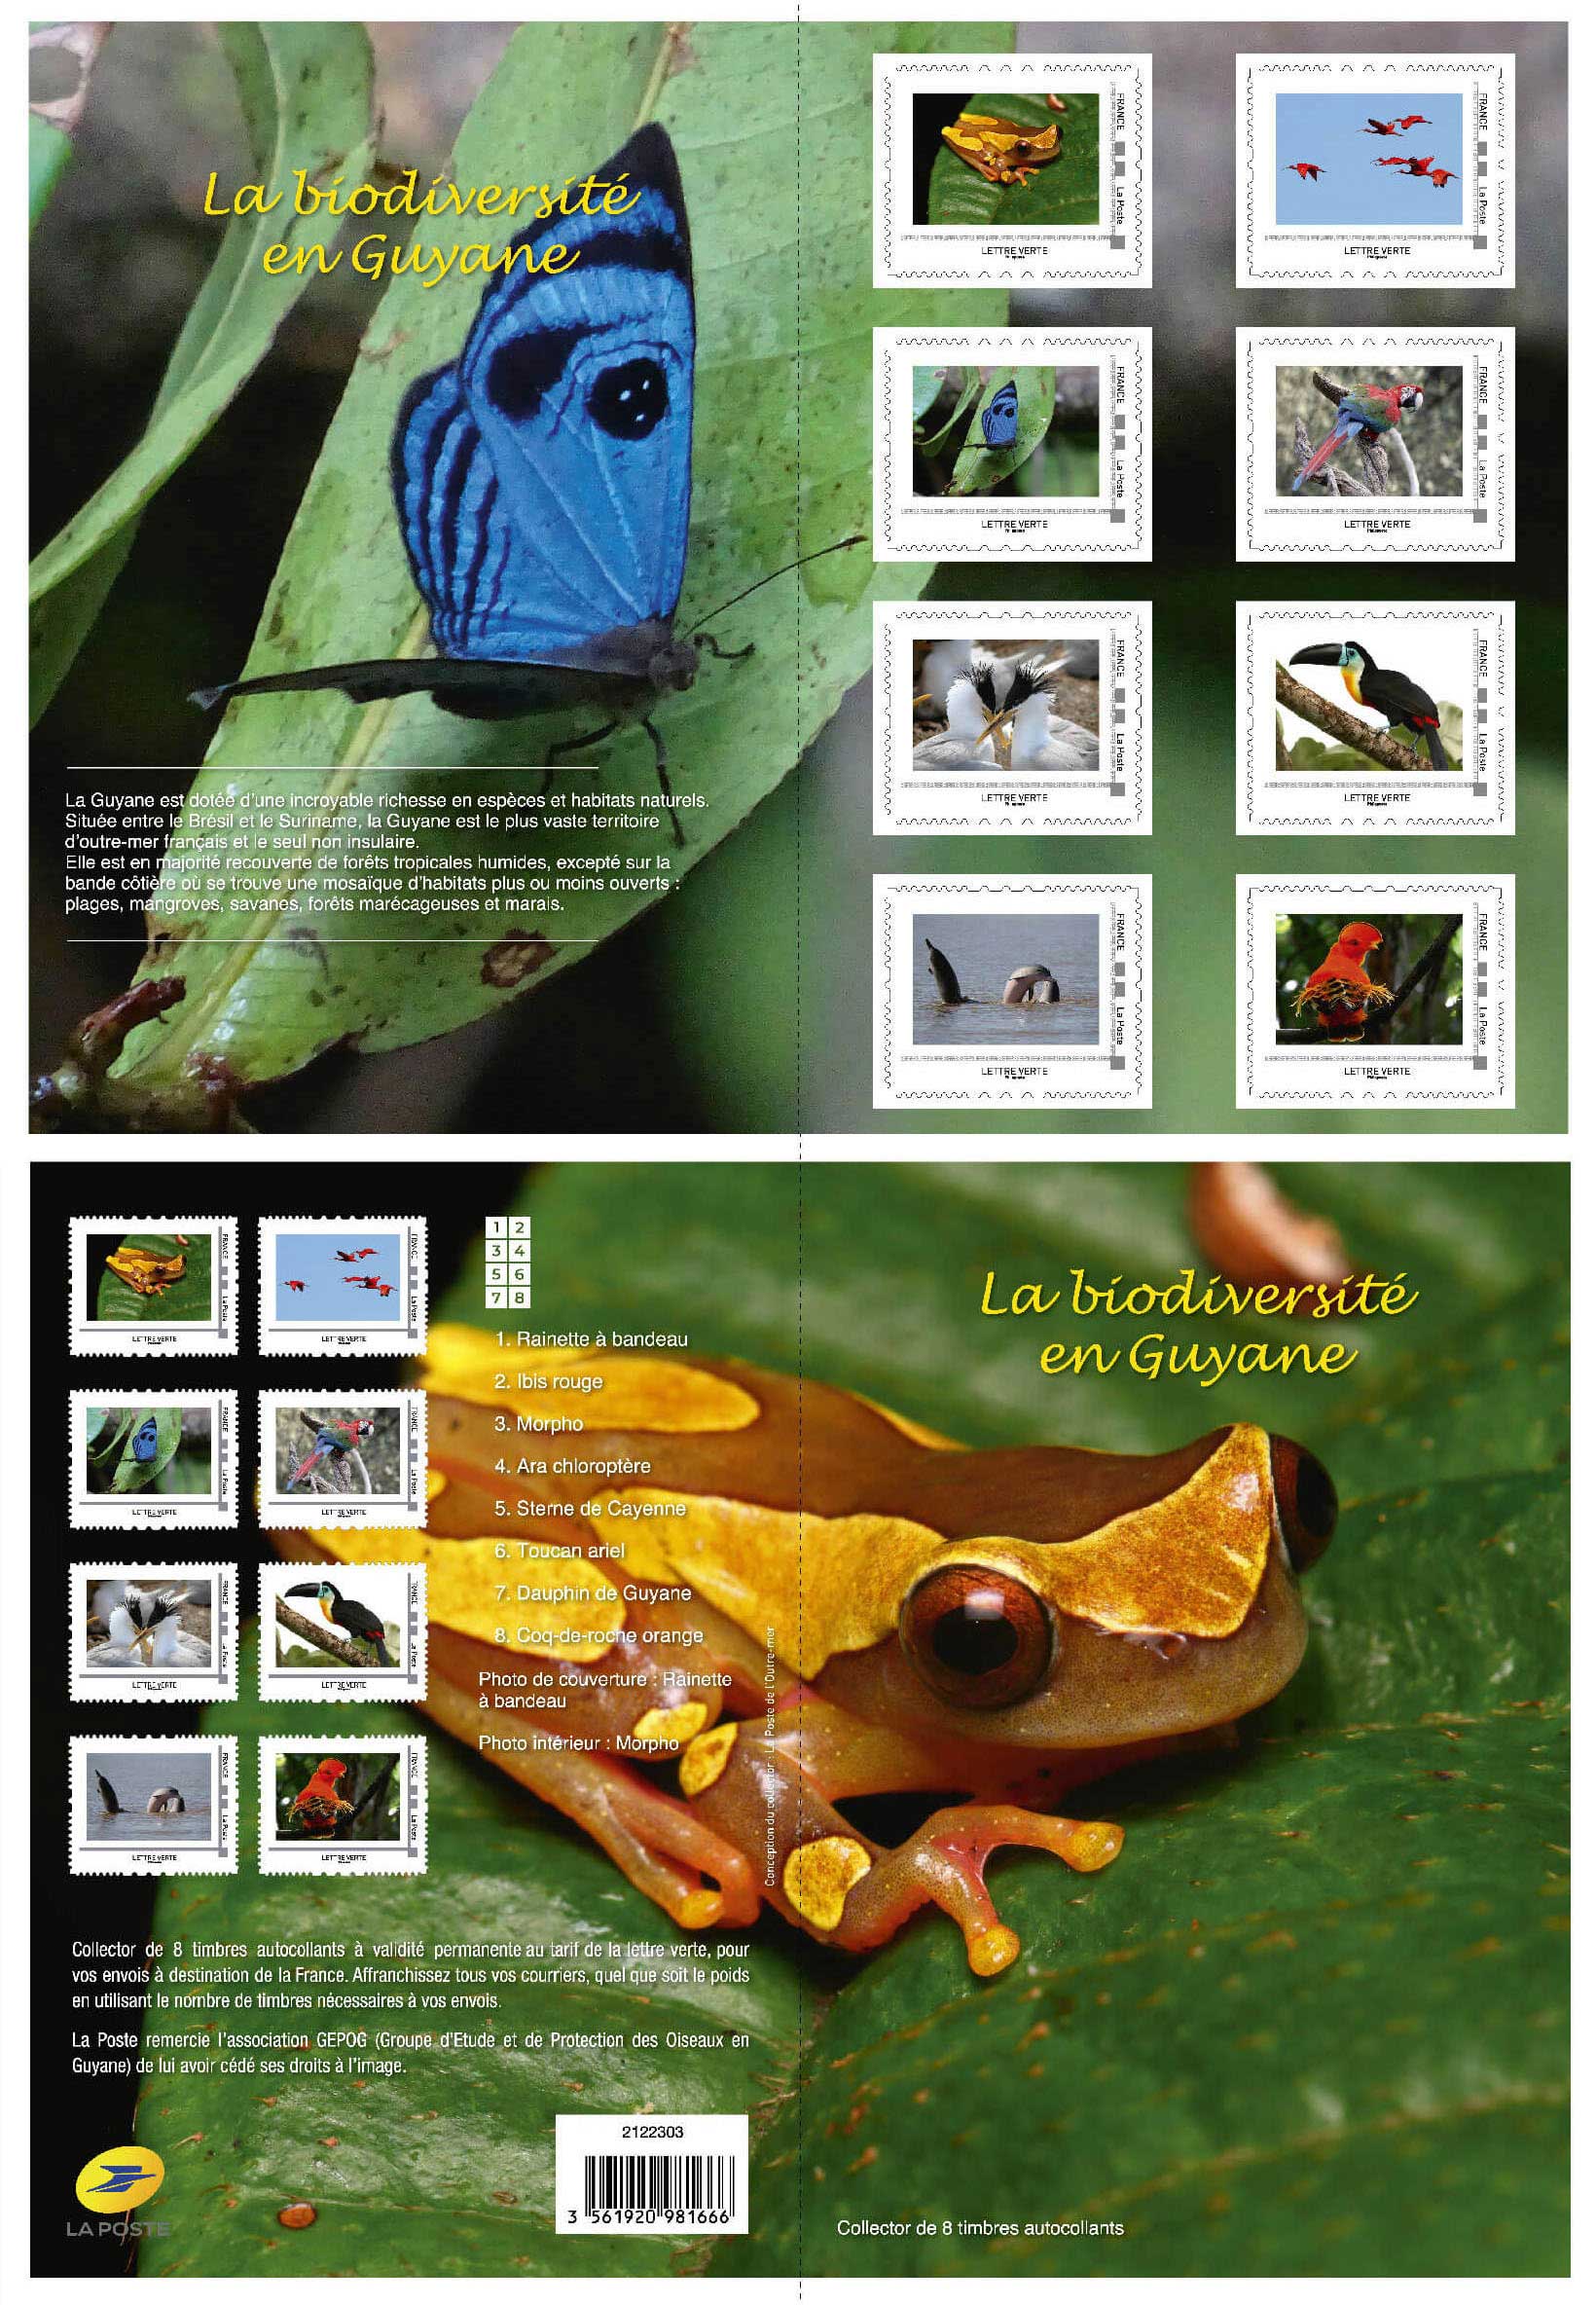 Collector 8 timbres - La biodiversité en Guyane